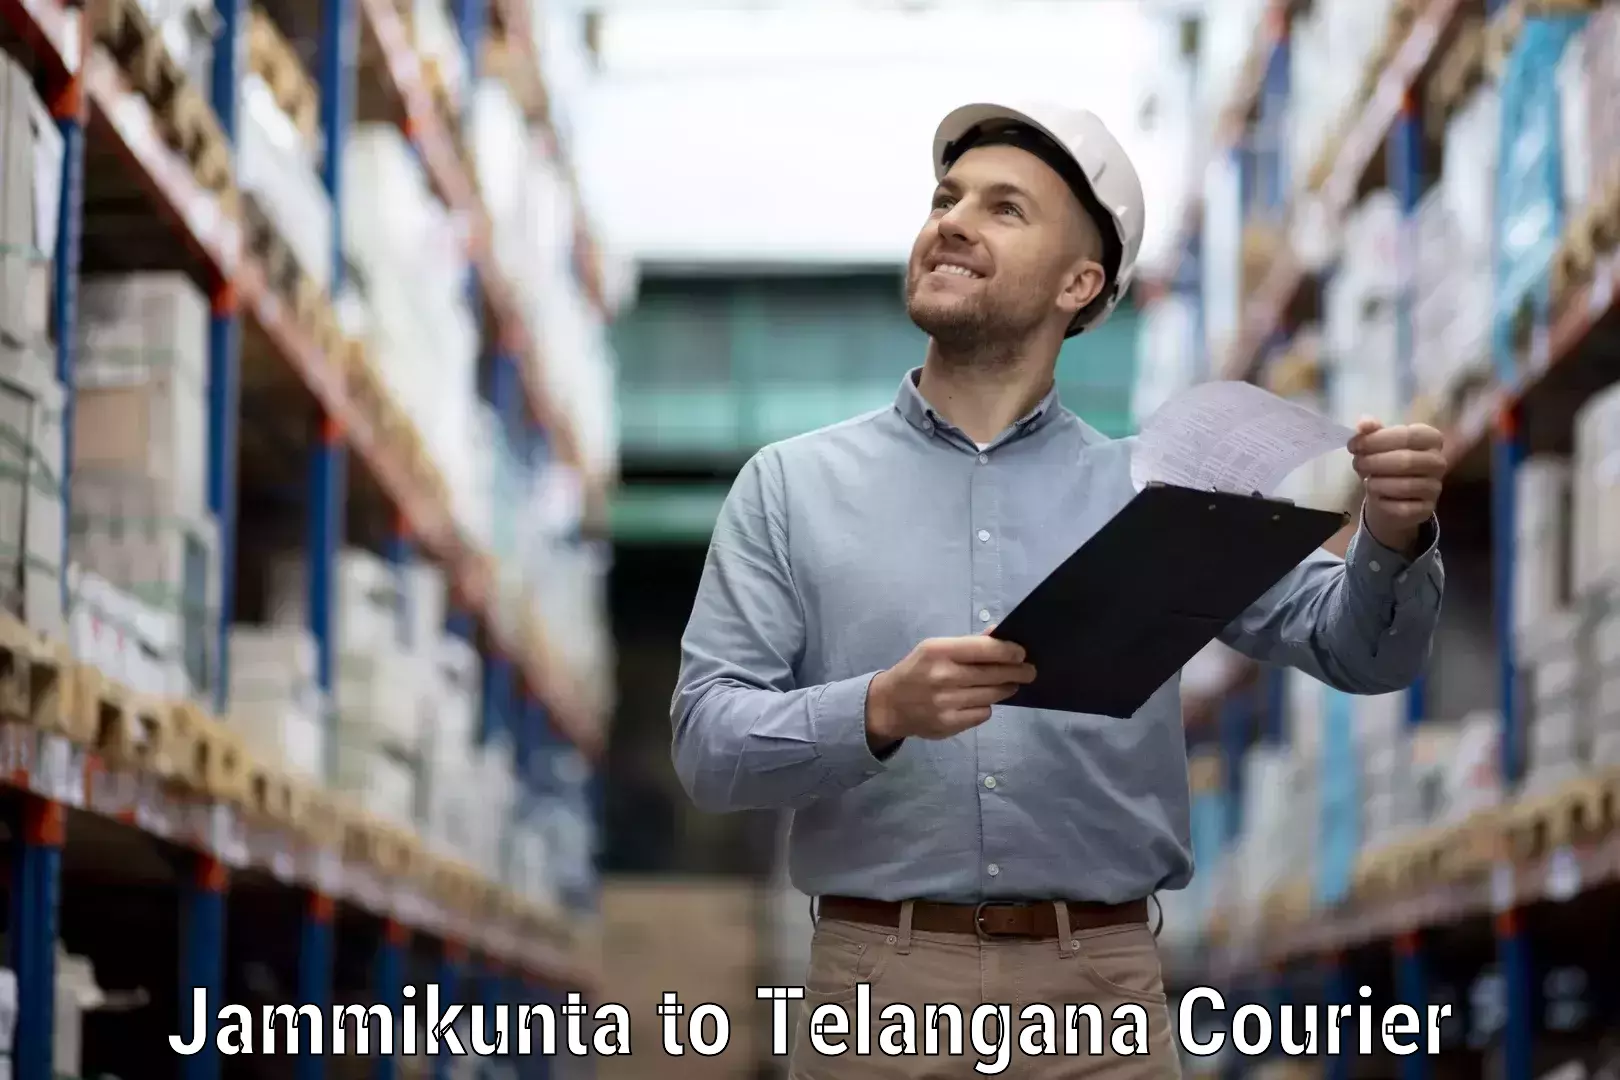 Courier service innovation Jammikunta to Gangadhara